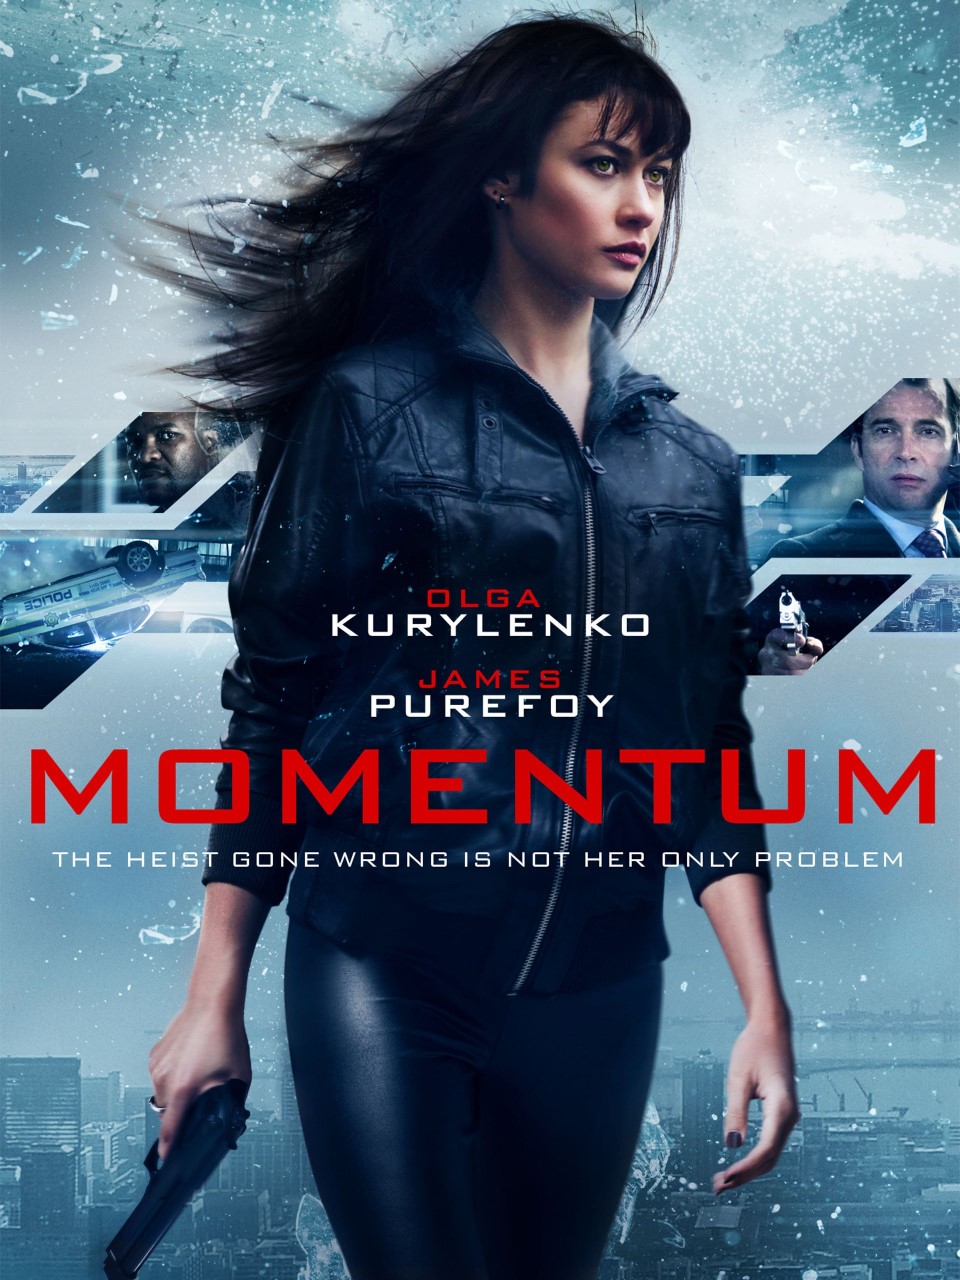 Plakat - Momentum